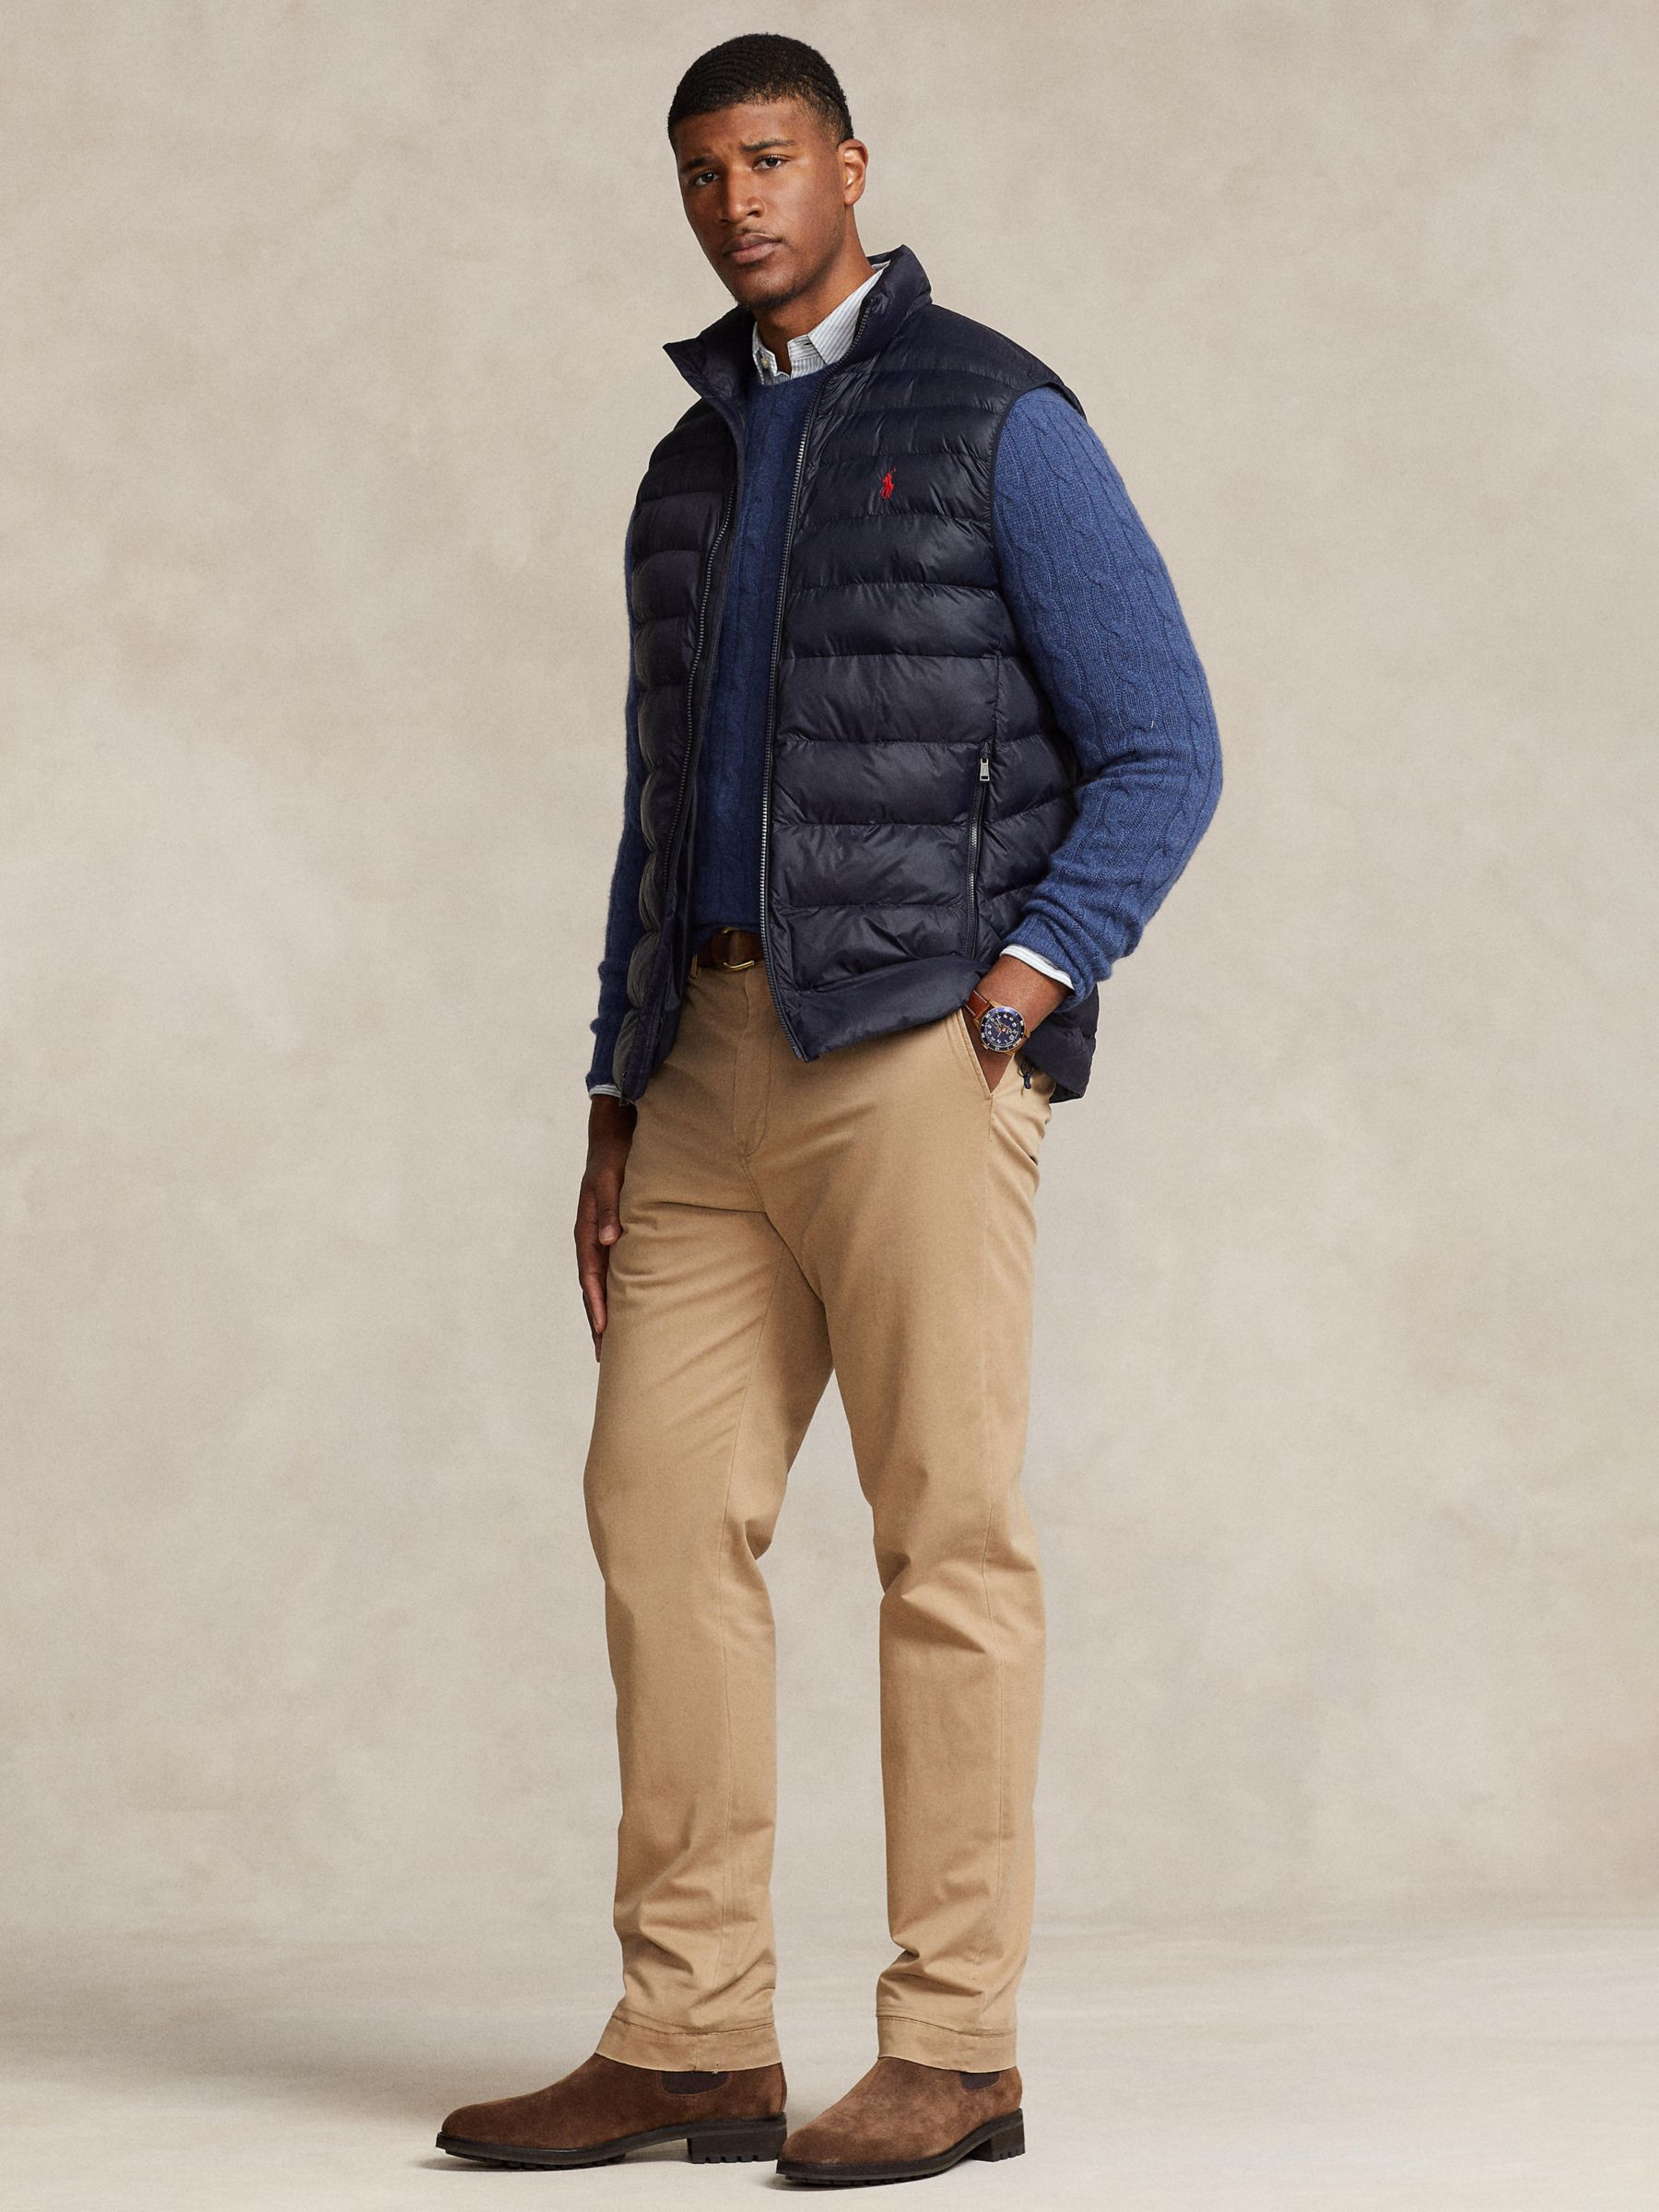 Polo Ralph Lauren Quilted Packable Vest - Mens